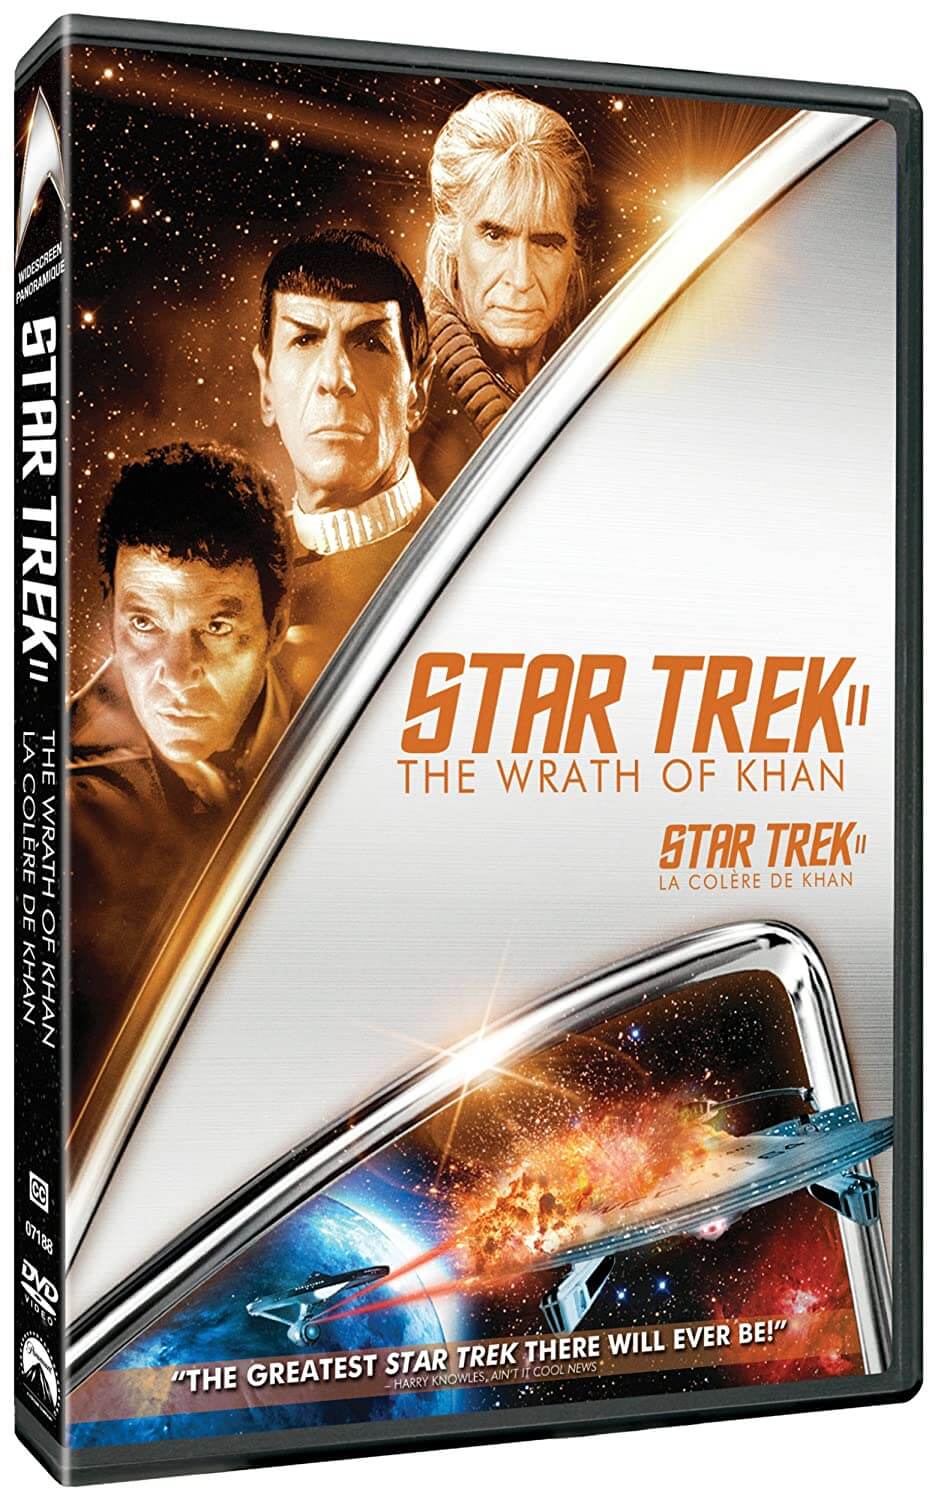 "Star Trek II: The Wrath of Khan" DVD